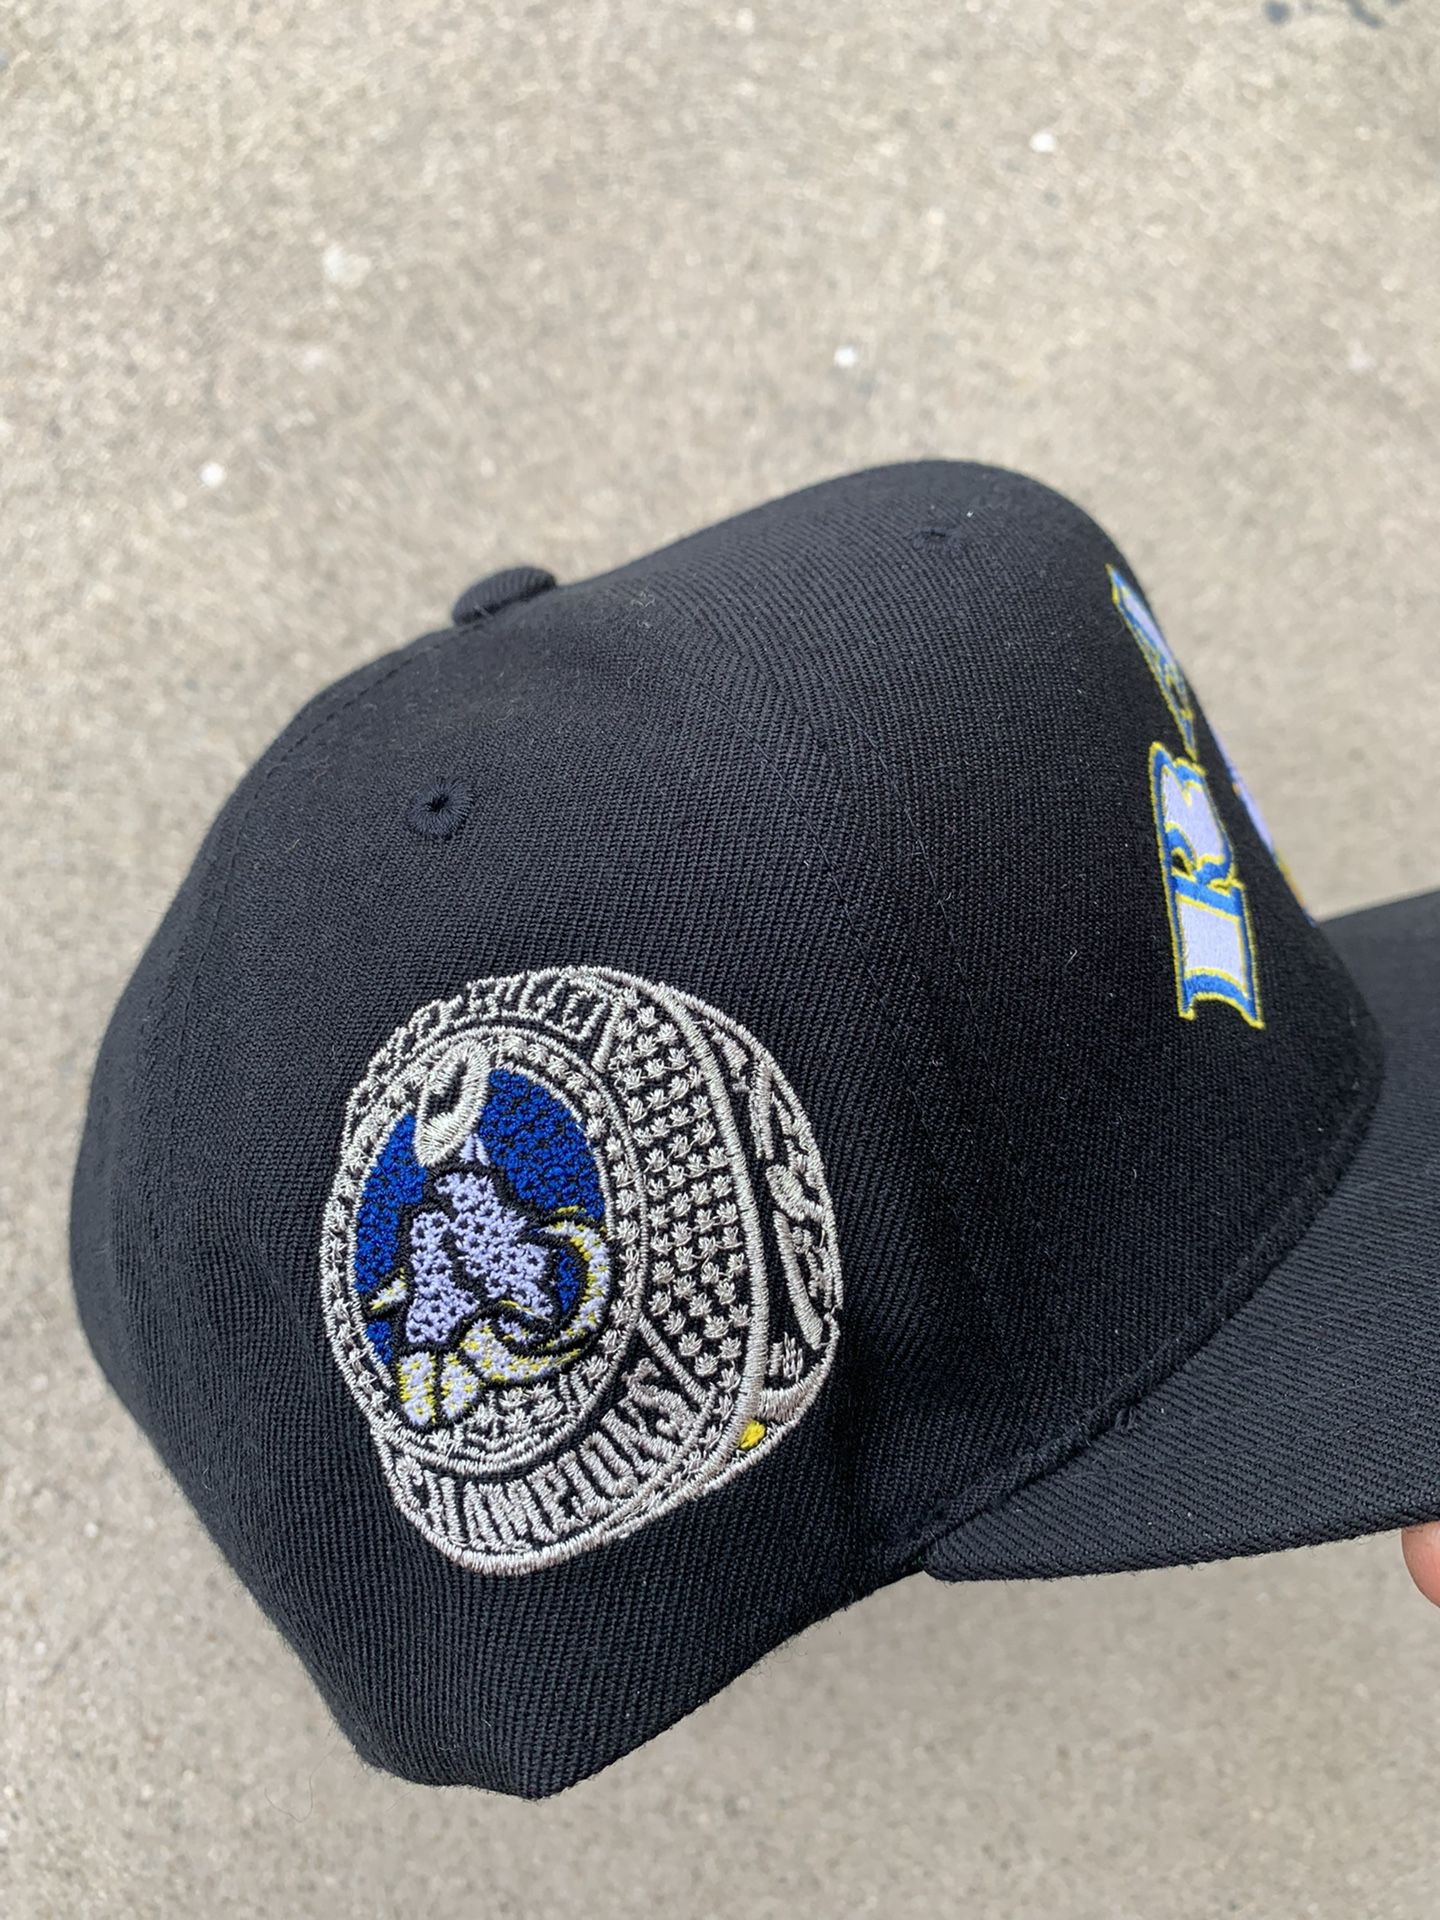 KTHLA Rams Super Bowl Hat for Sale in Downey, CA - OfferUp